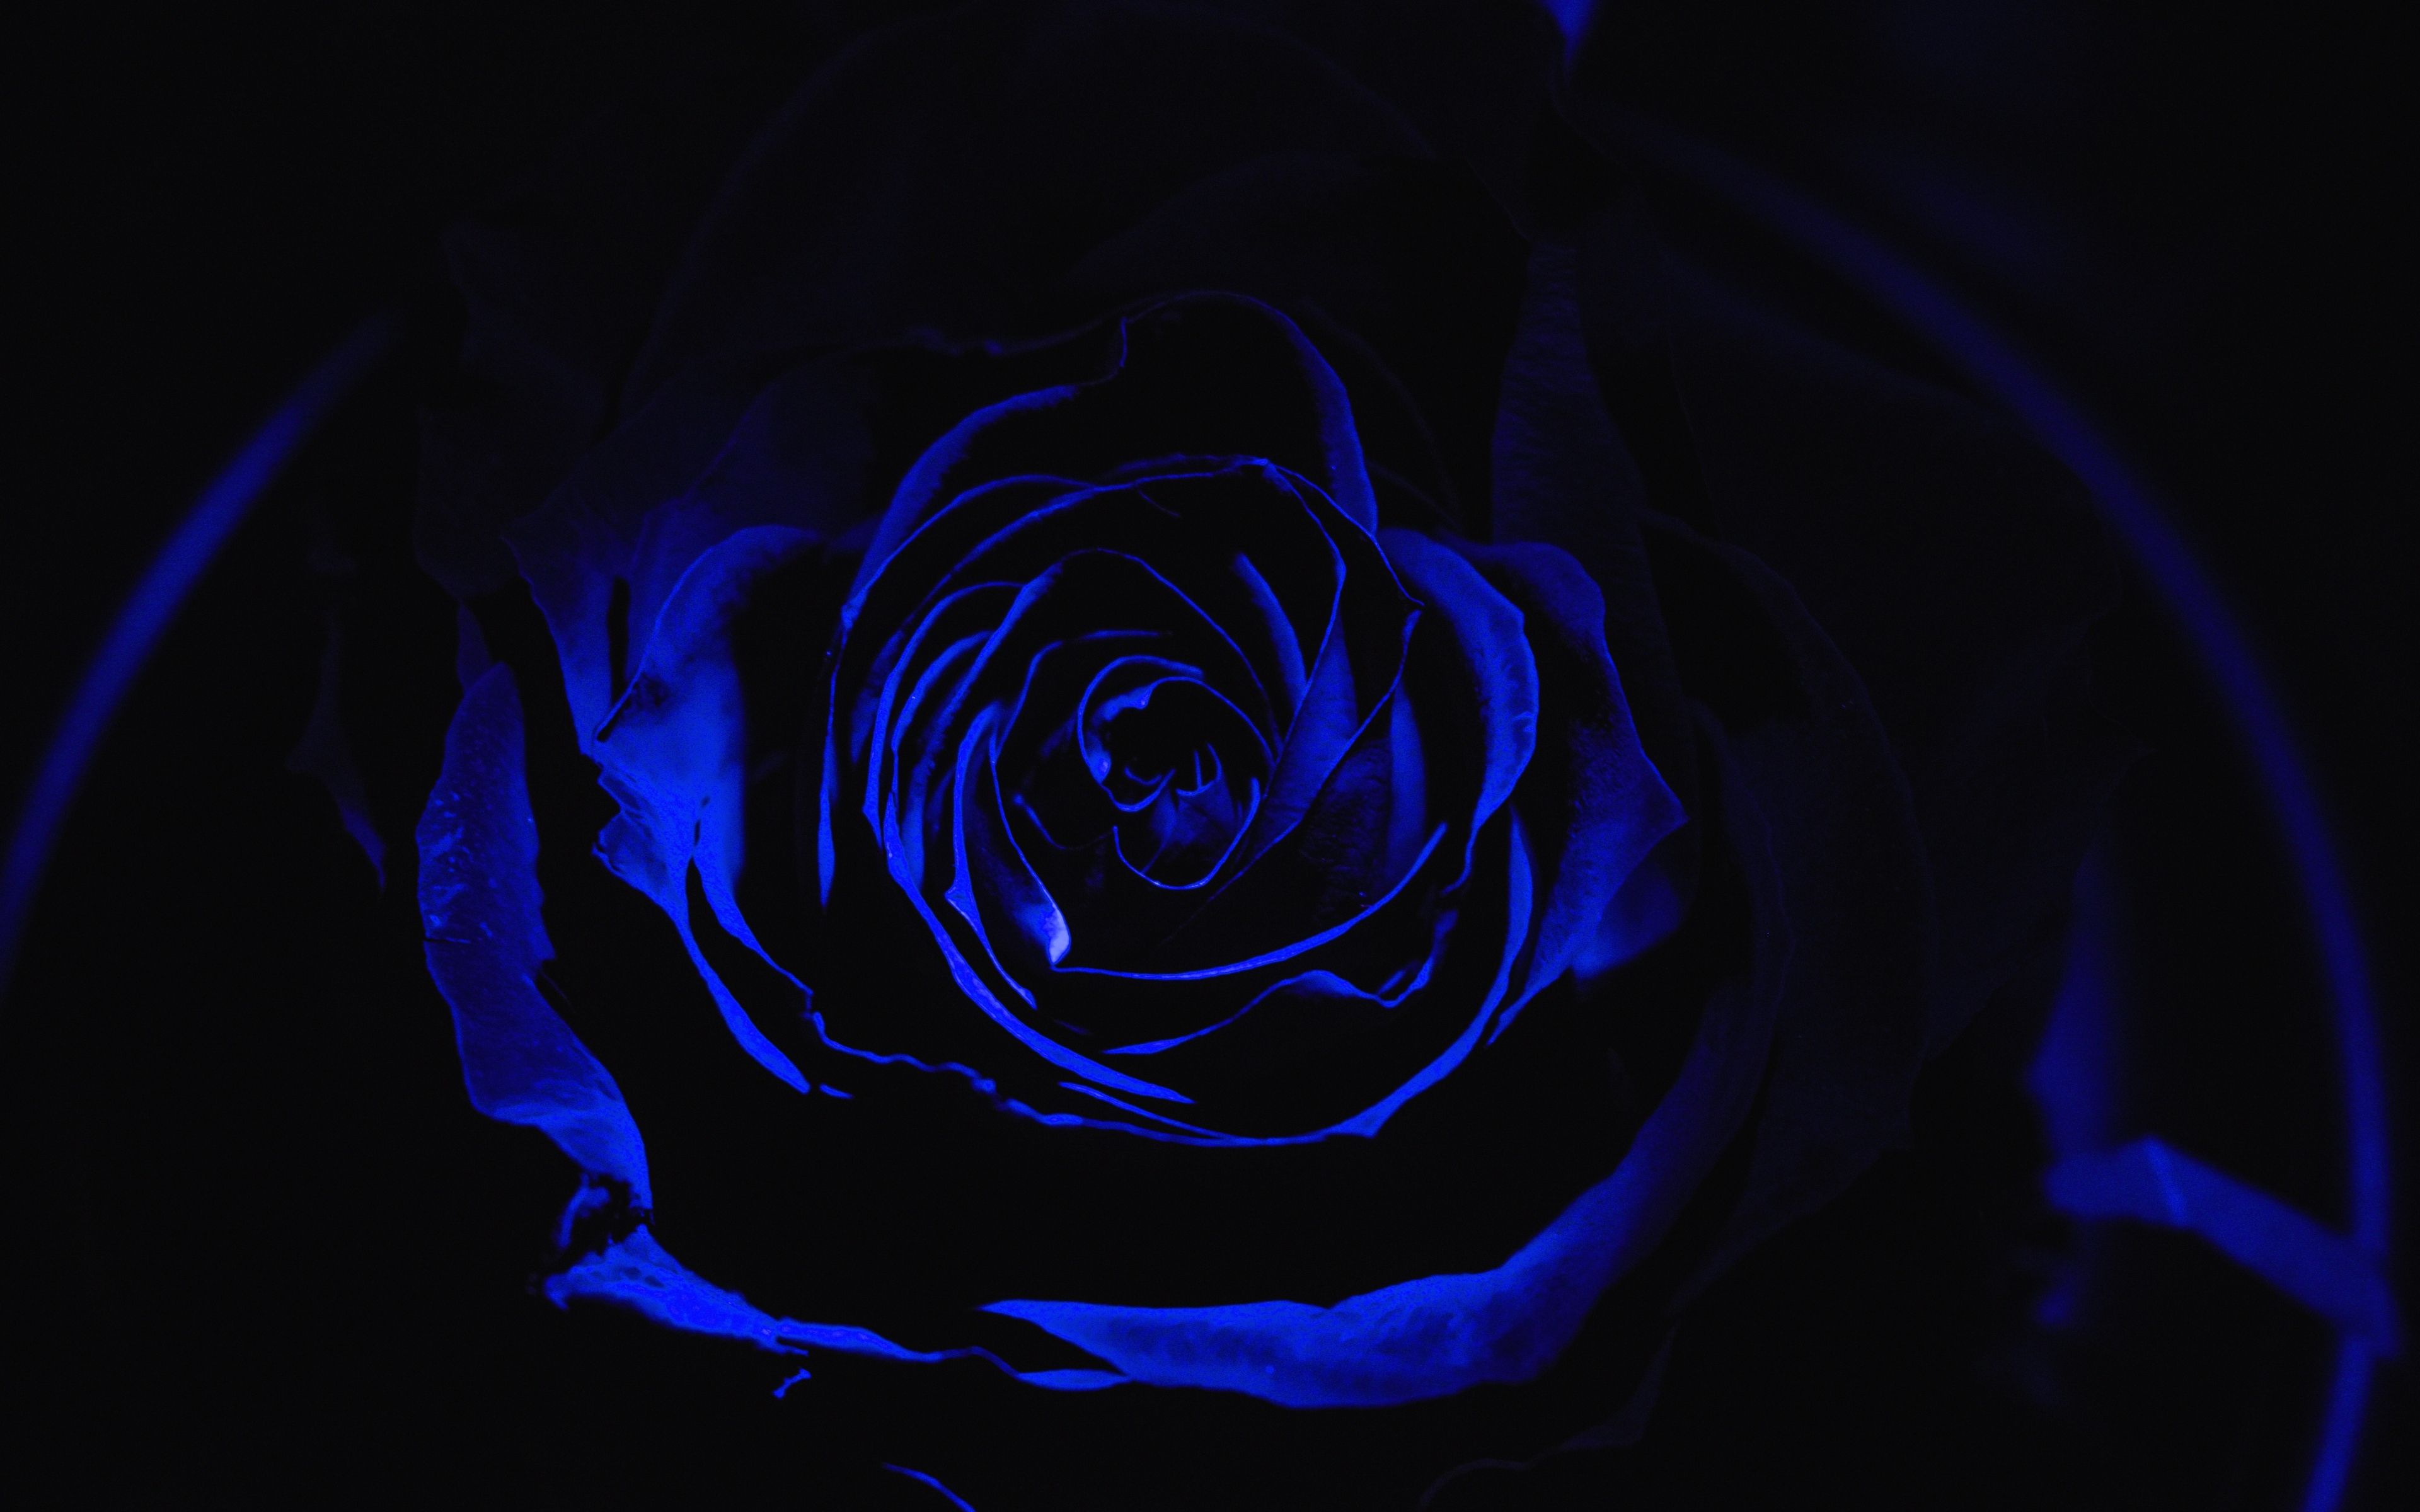 Download 3840x2400 wallpaper blue rose, dark, close up, 4k, ultra HD 16: widescreen, 3840x2400 HD image, background, 10127